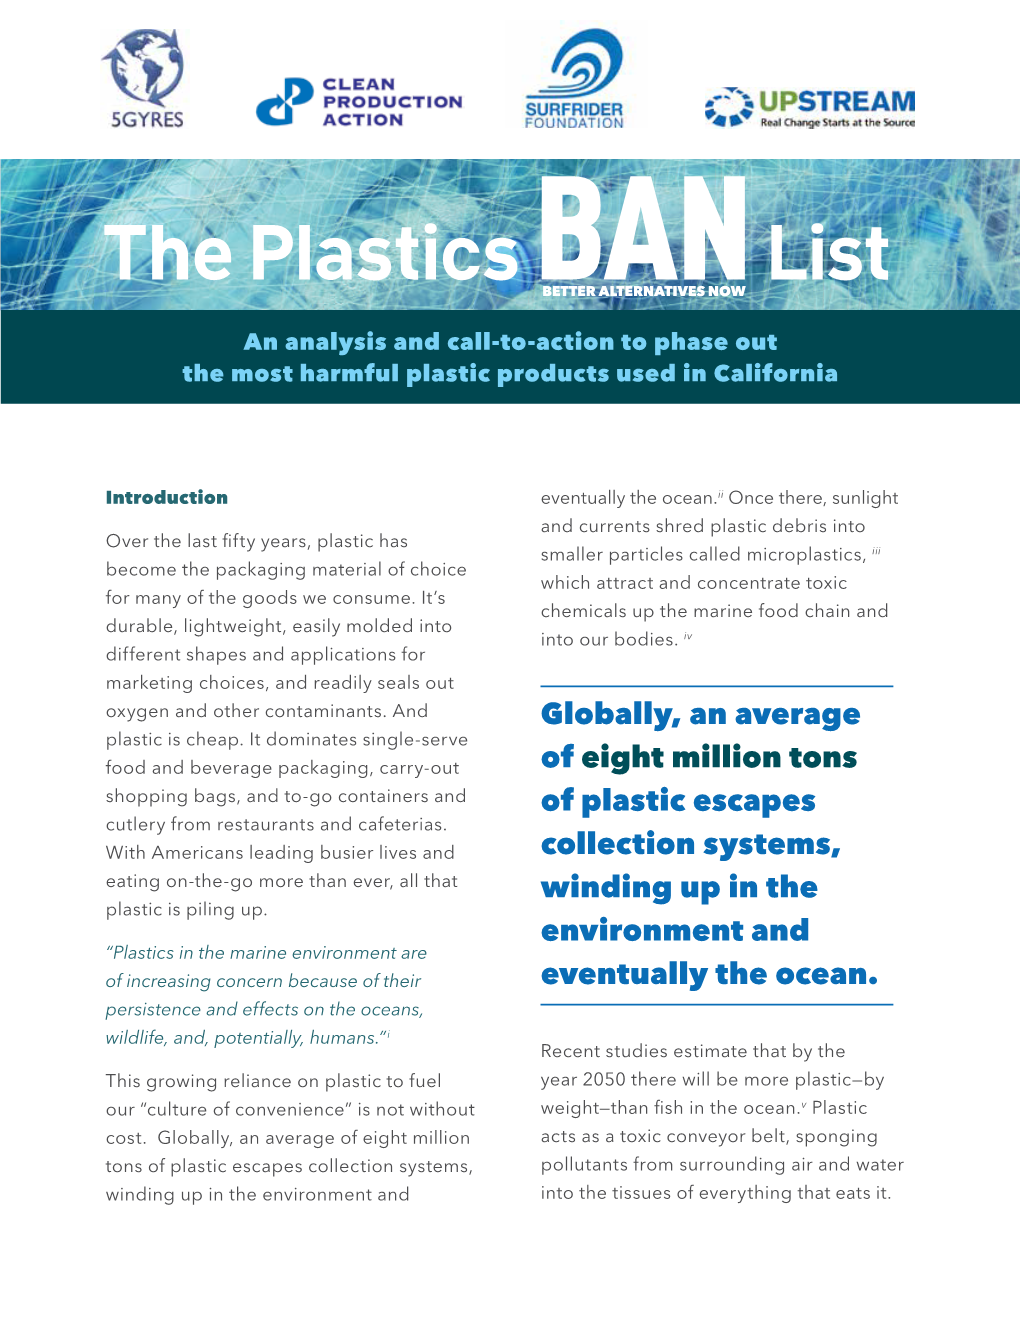 The Plasticsbanlist